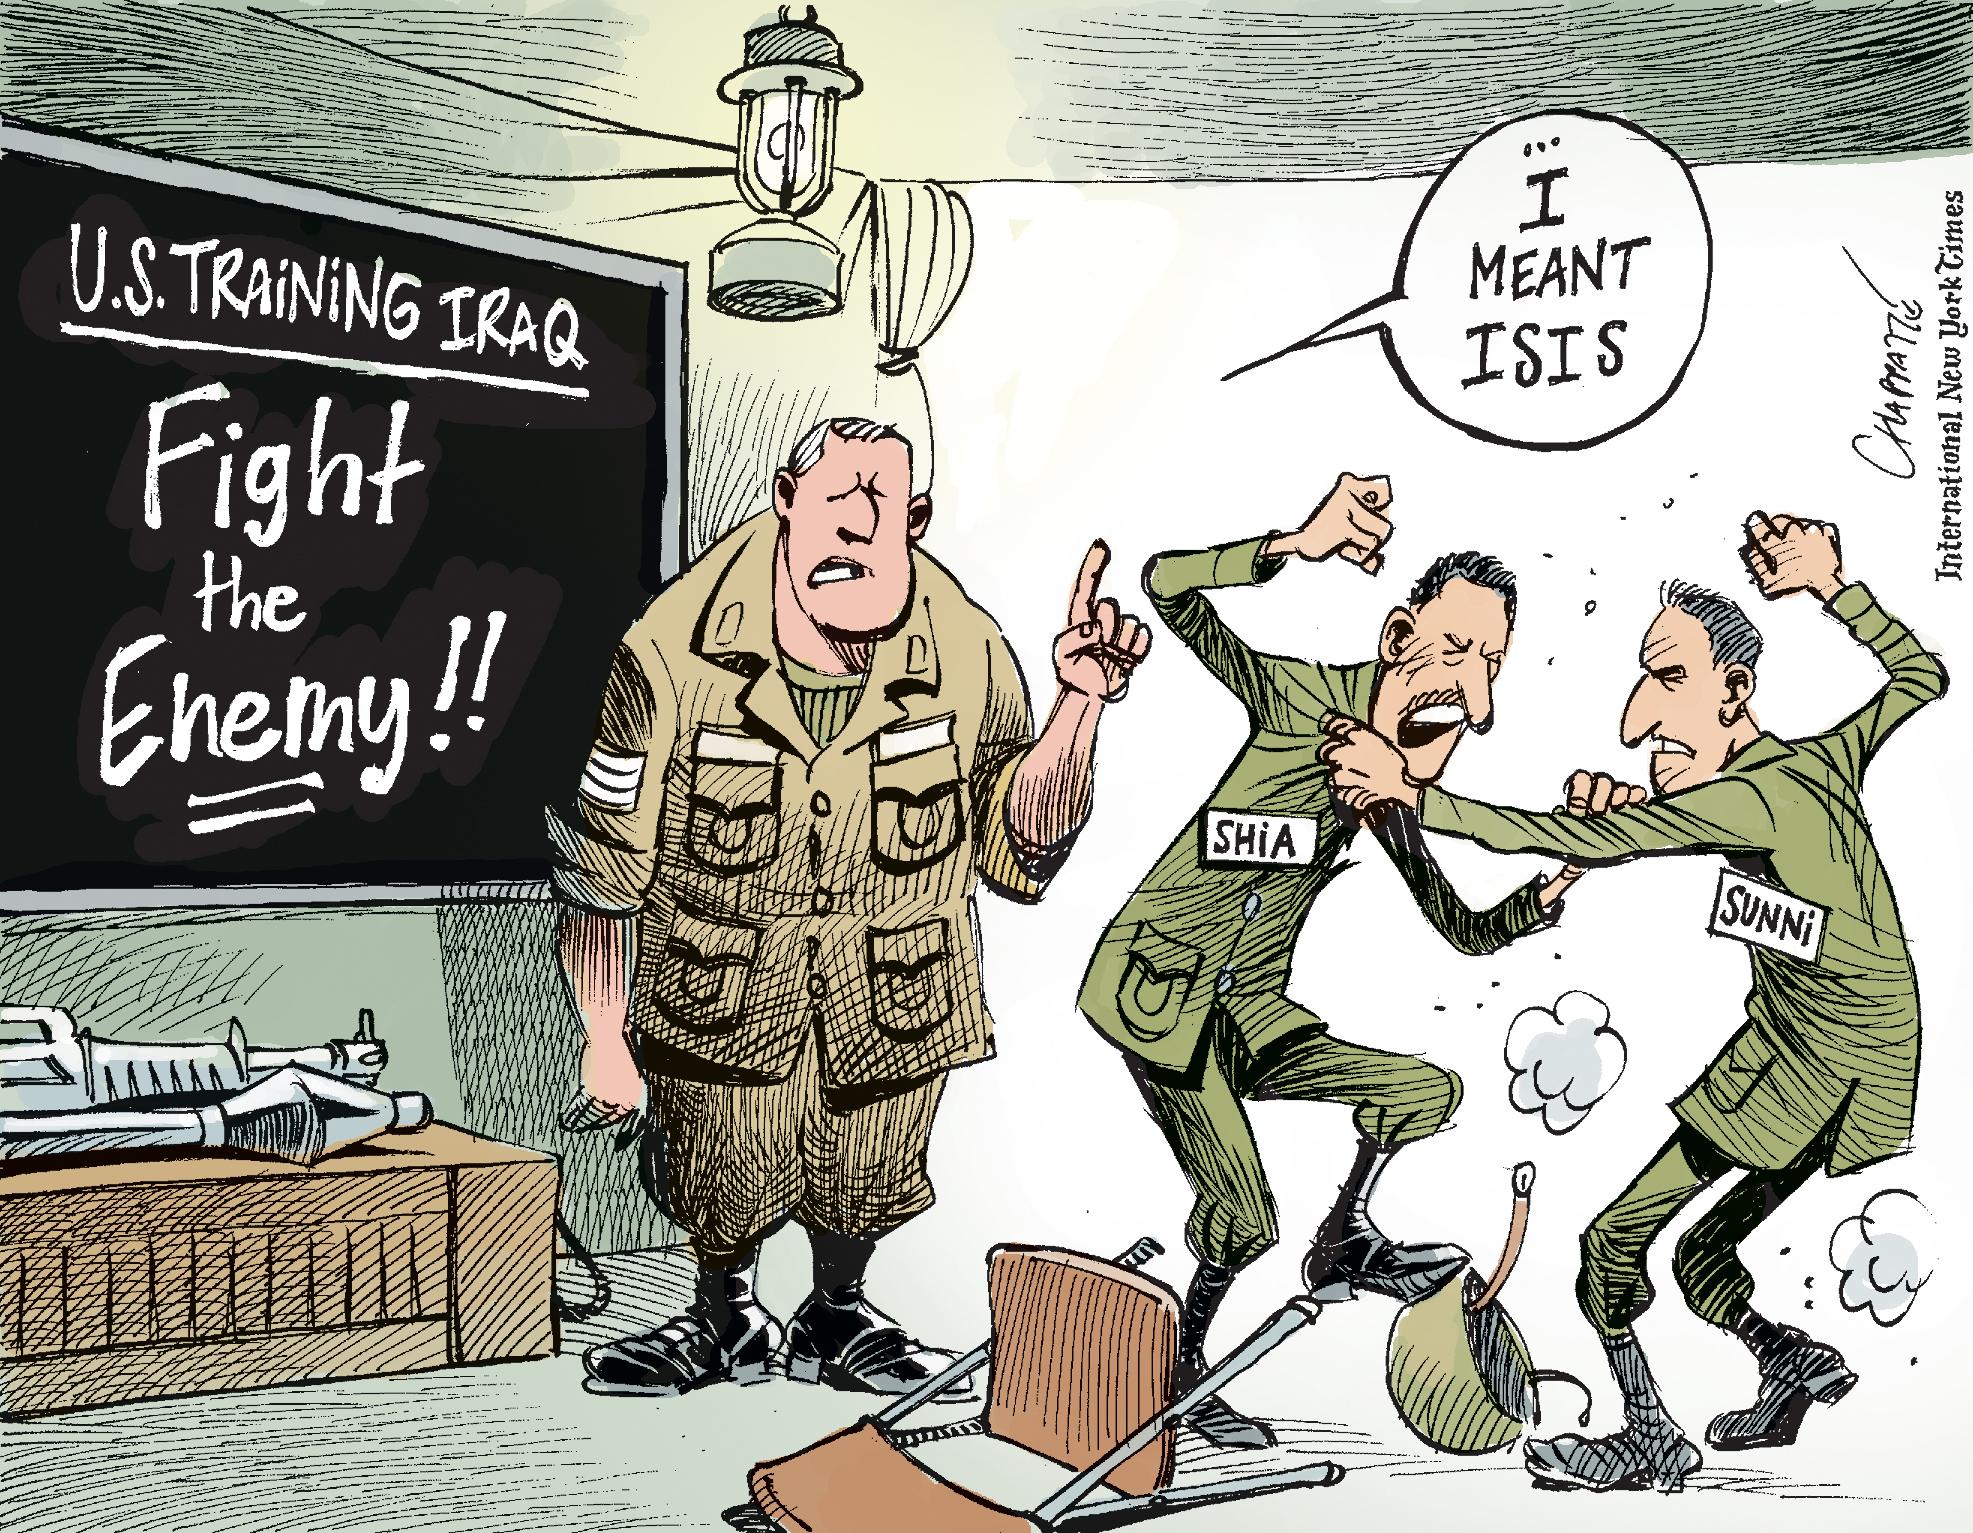 More U.S. trainers in Iraq